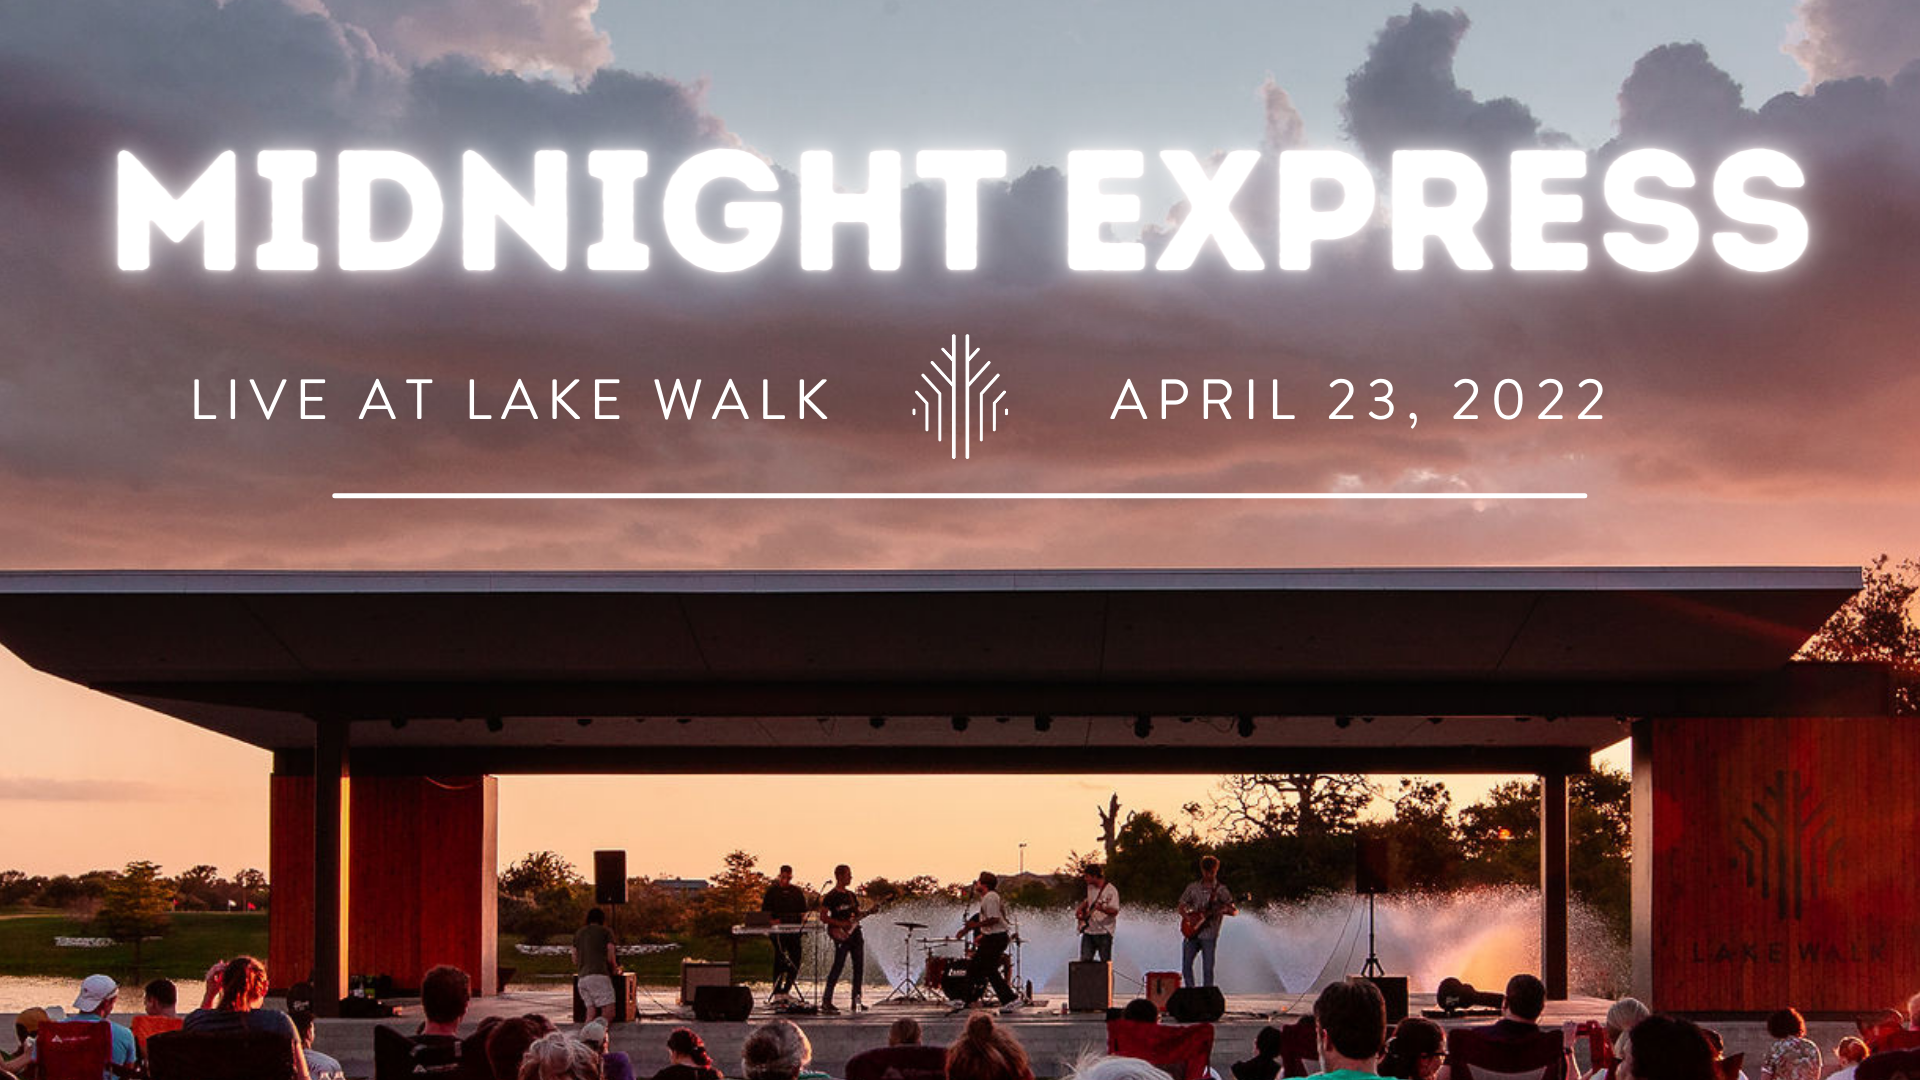 Midnight Express concert graphic